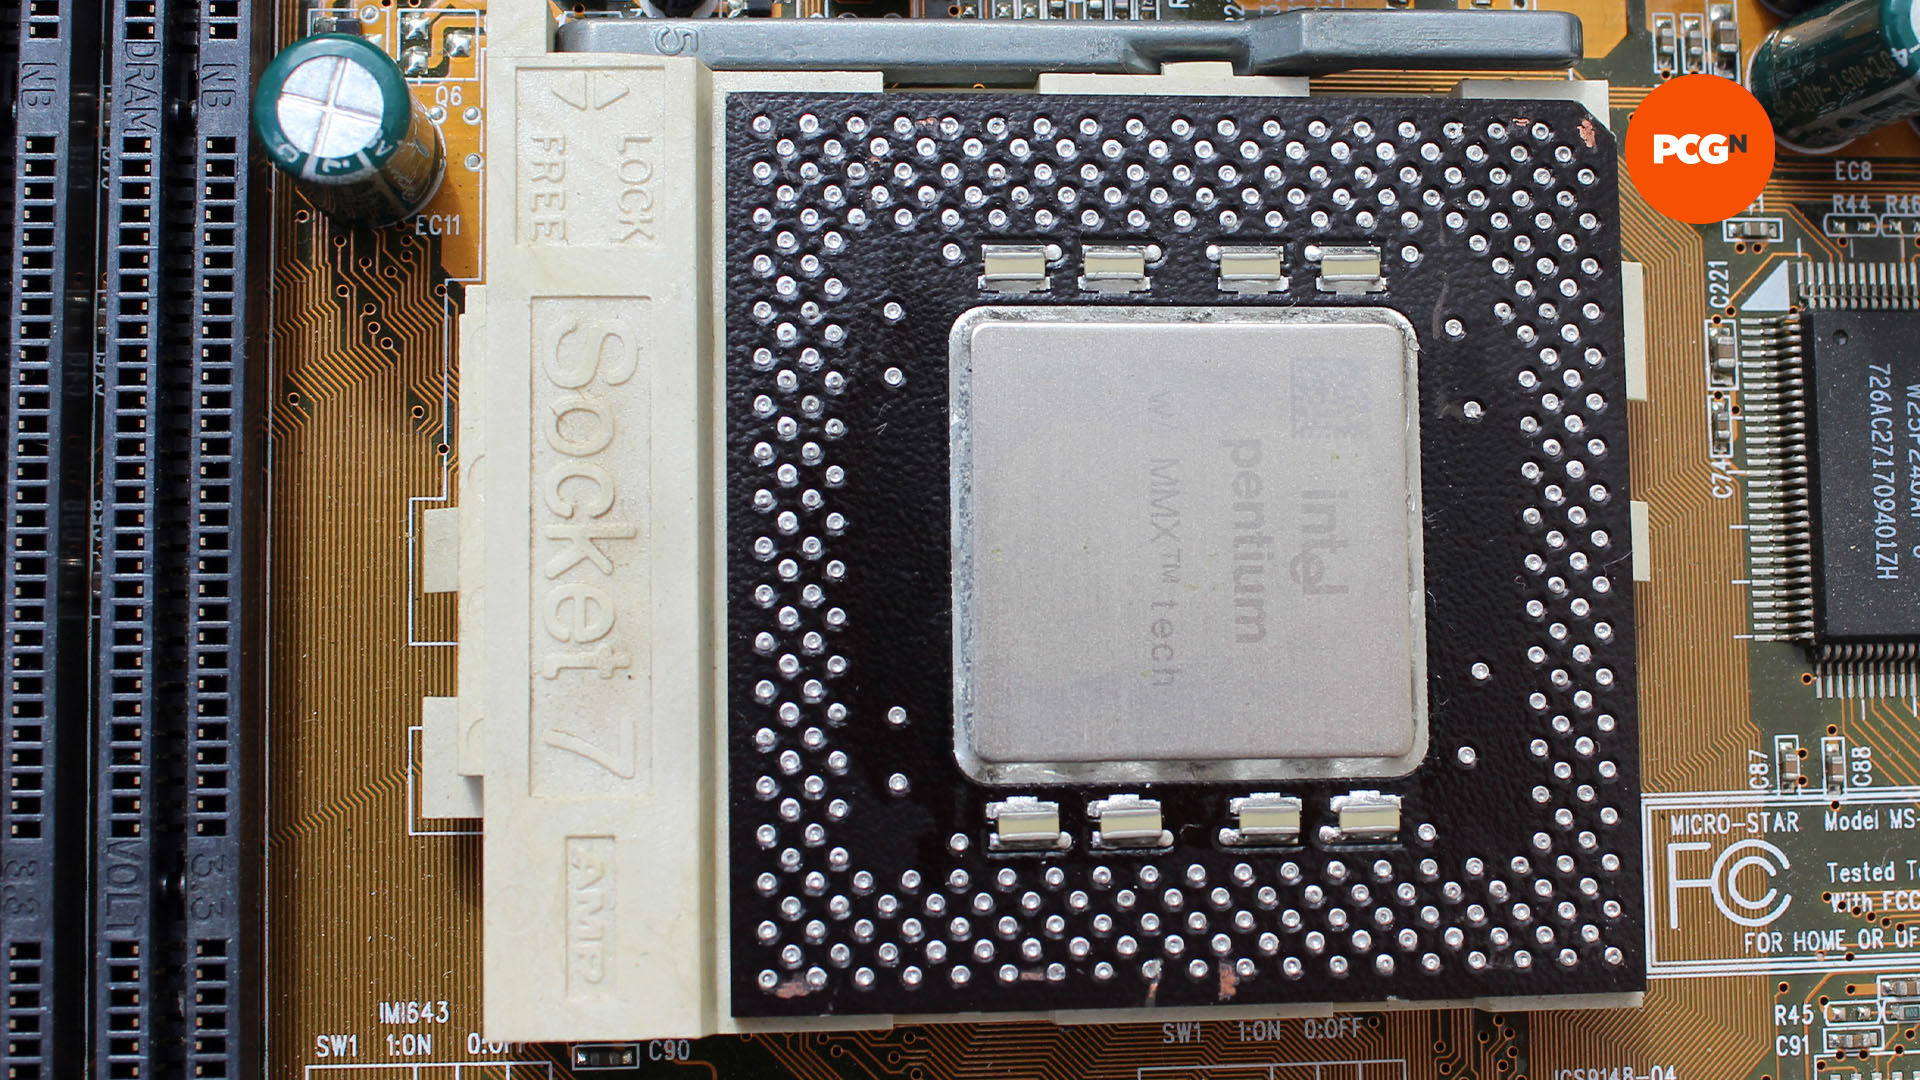 How to build a retro gaming PC: Installed Intel Pentium MMX CPU